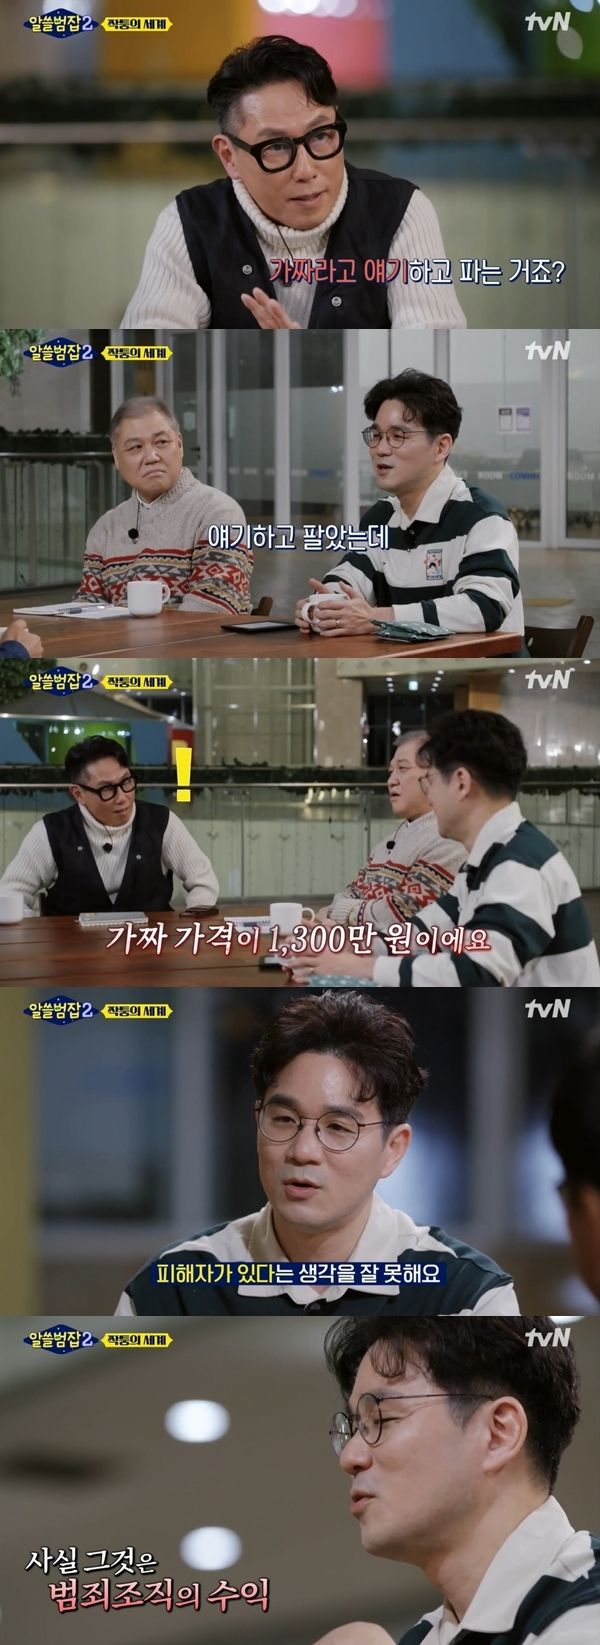 tvN '알쓸범잡2'